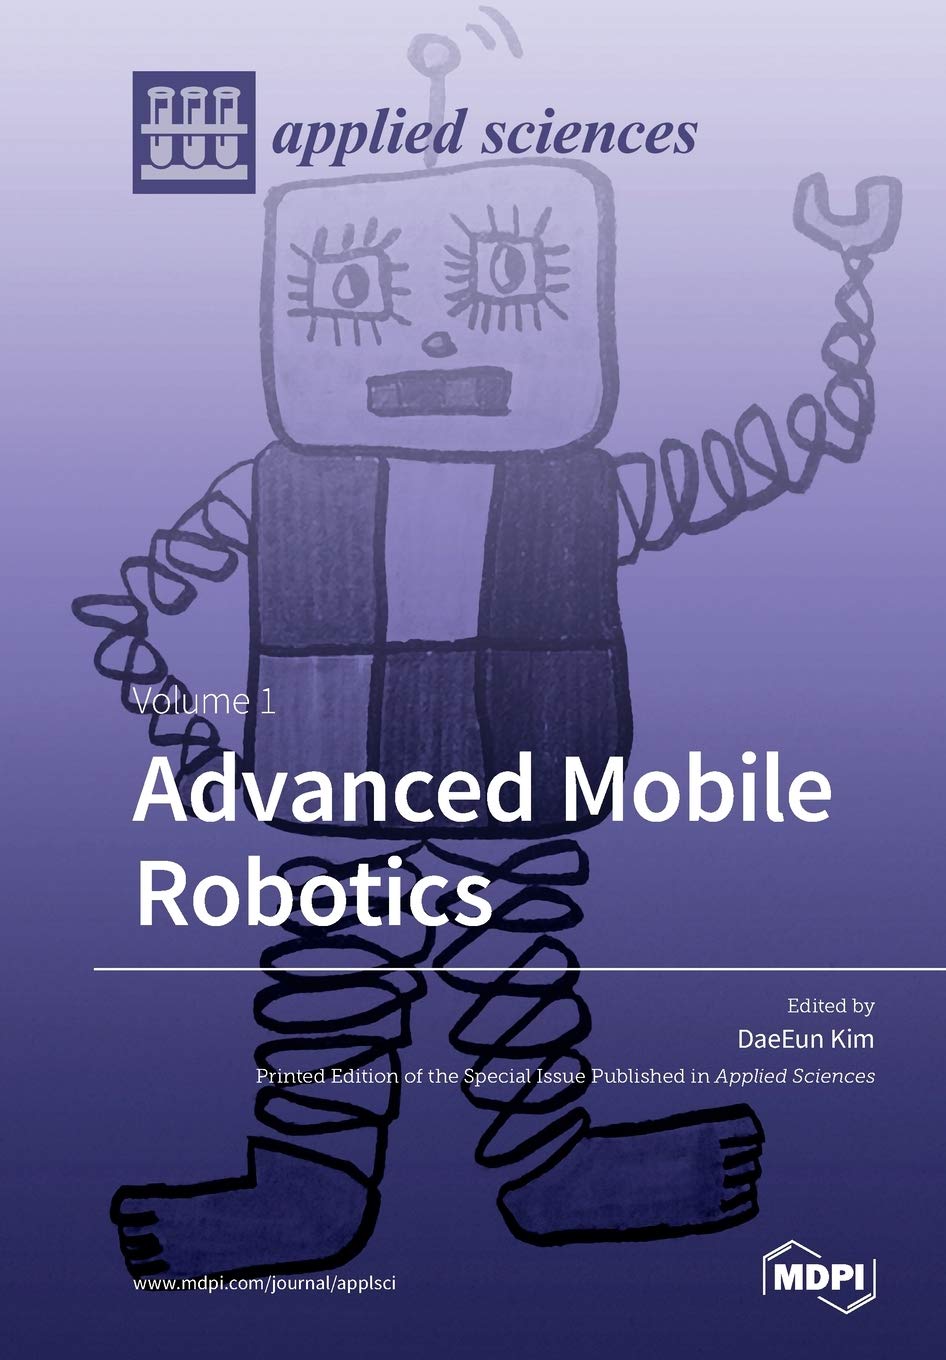 Advanced Mobile Robotics: Volume 1 by Daeeun Kim